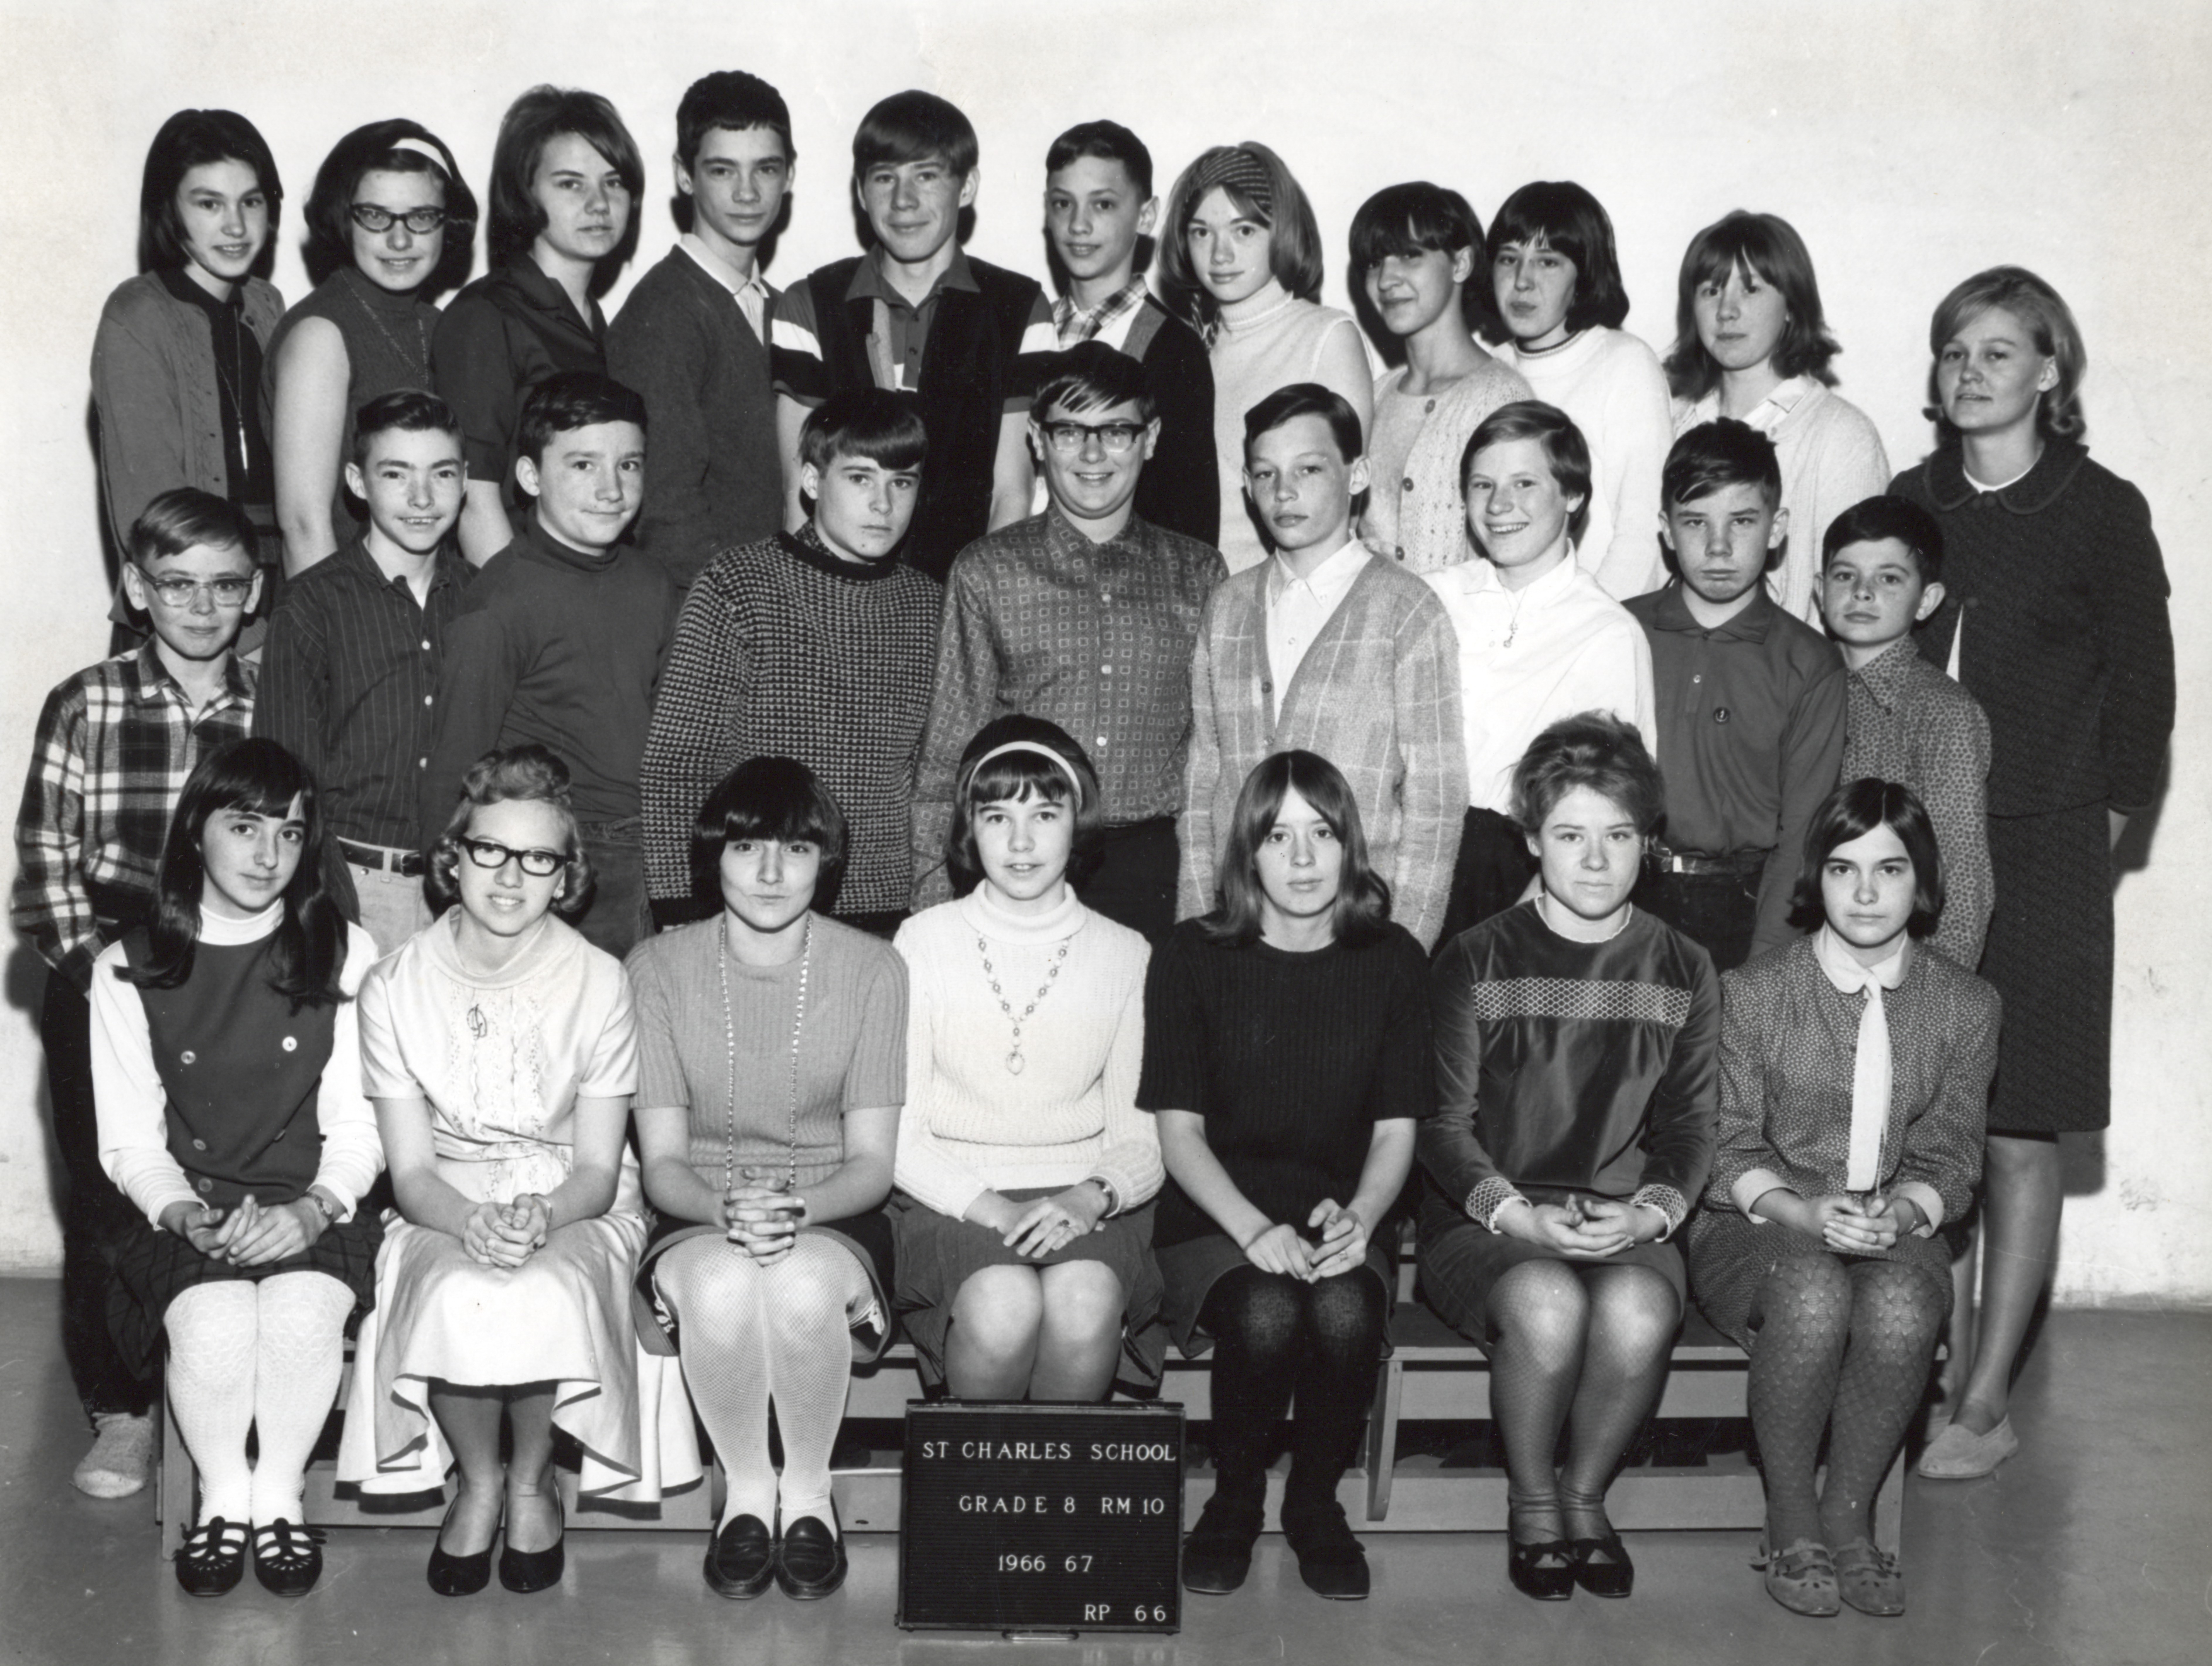 St. Charles School, Grade 8 1966-67 